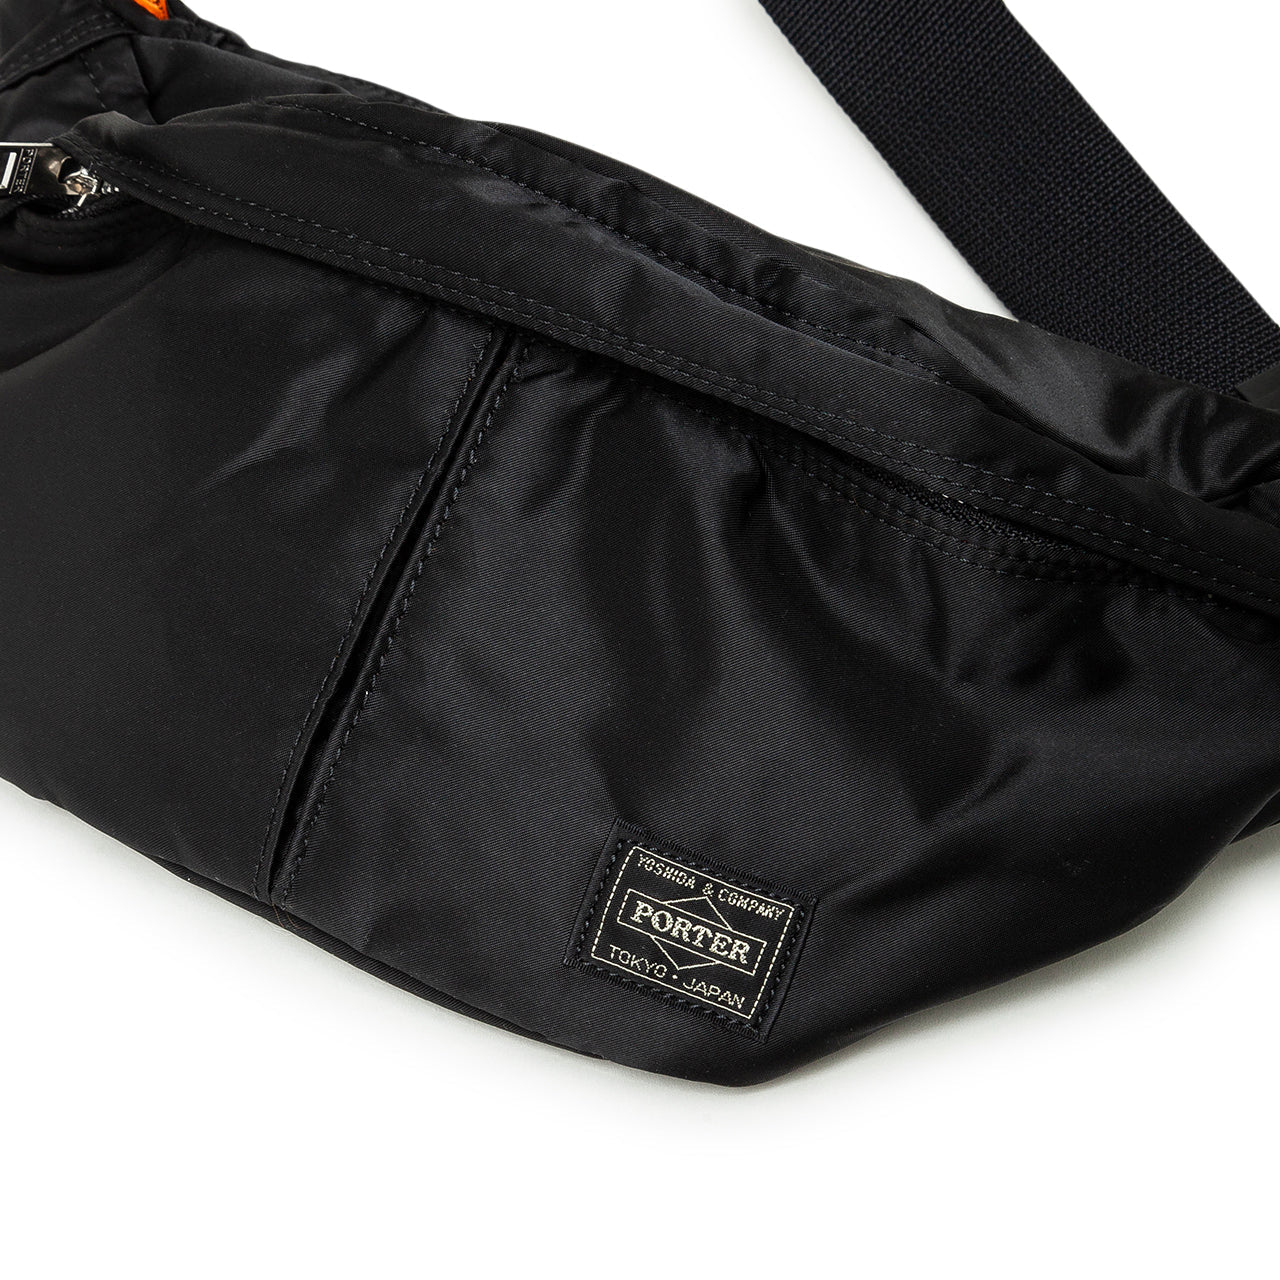  Yoshida Bag Porter Waist Bag Heat 703-07971 Black from Japan :  Clothing, Shoes & Jewelry